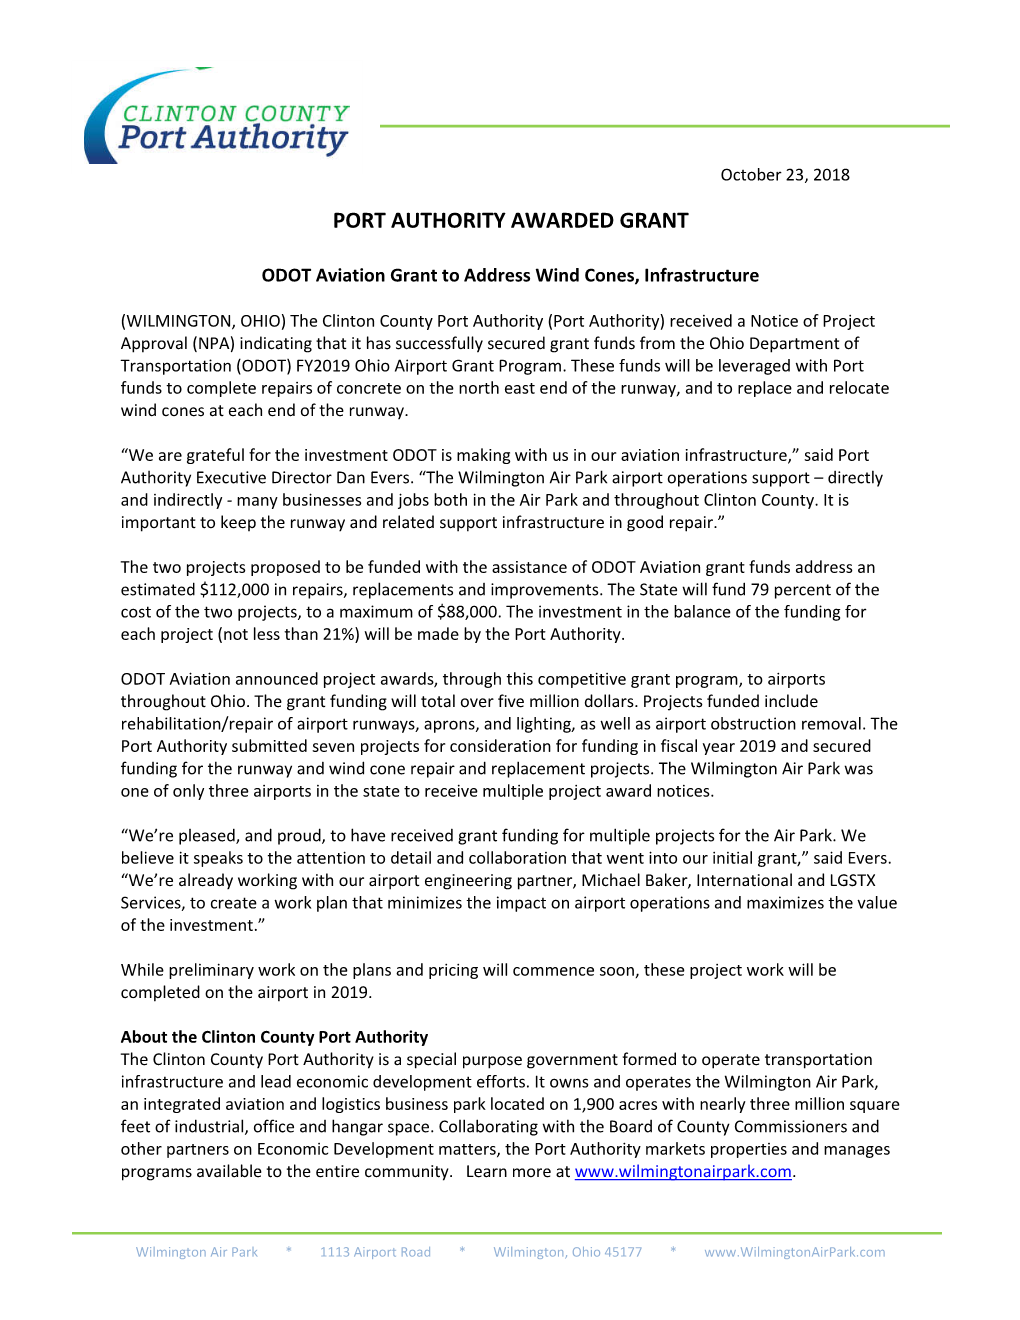 Port Authority Awarded Grant